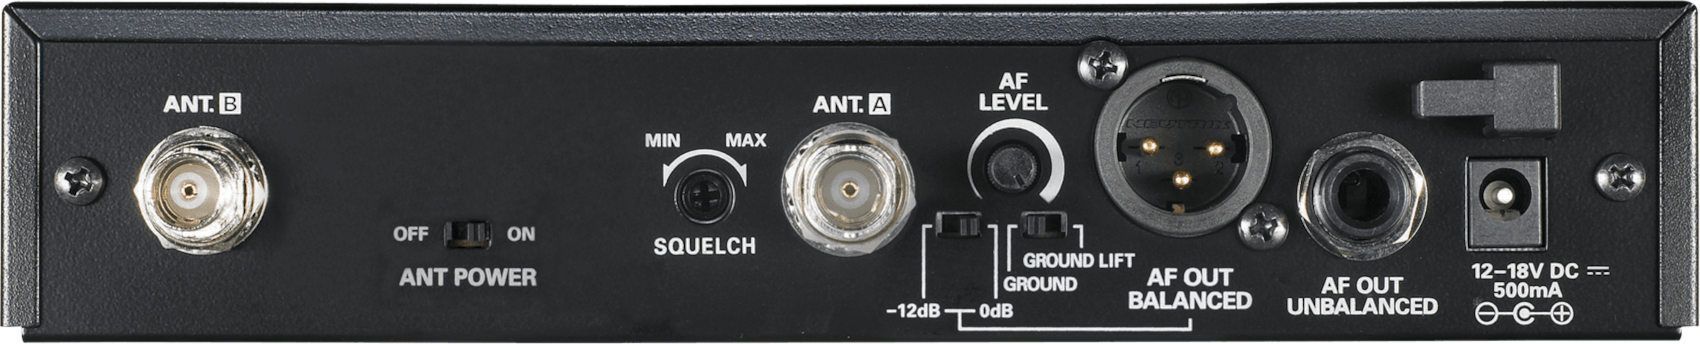 Audio-technica ATW-R2100a - фото 3